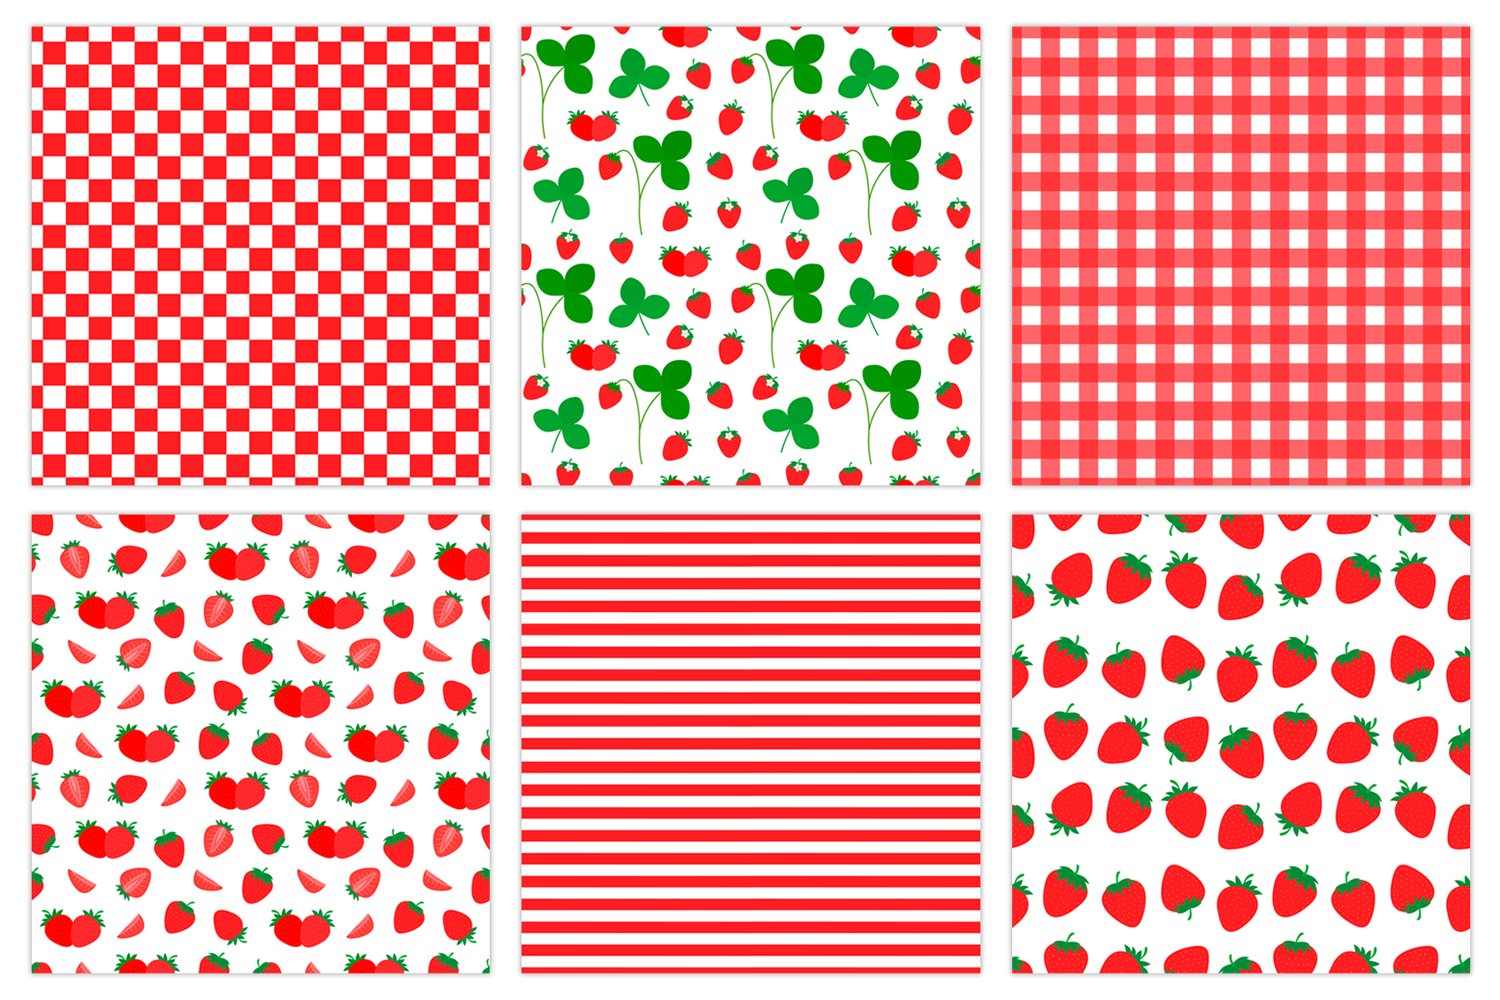 Strawberry ornament pattern design.